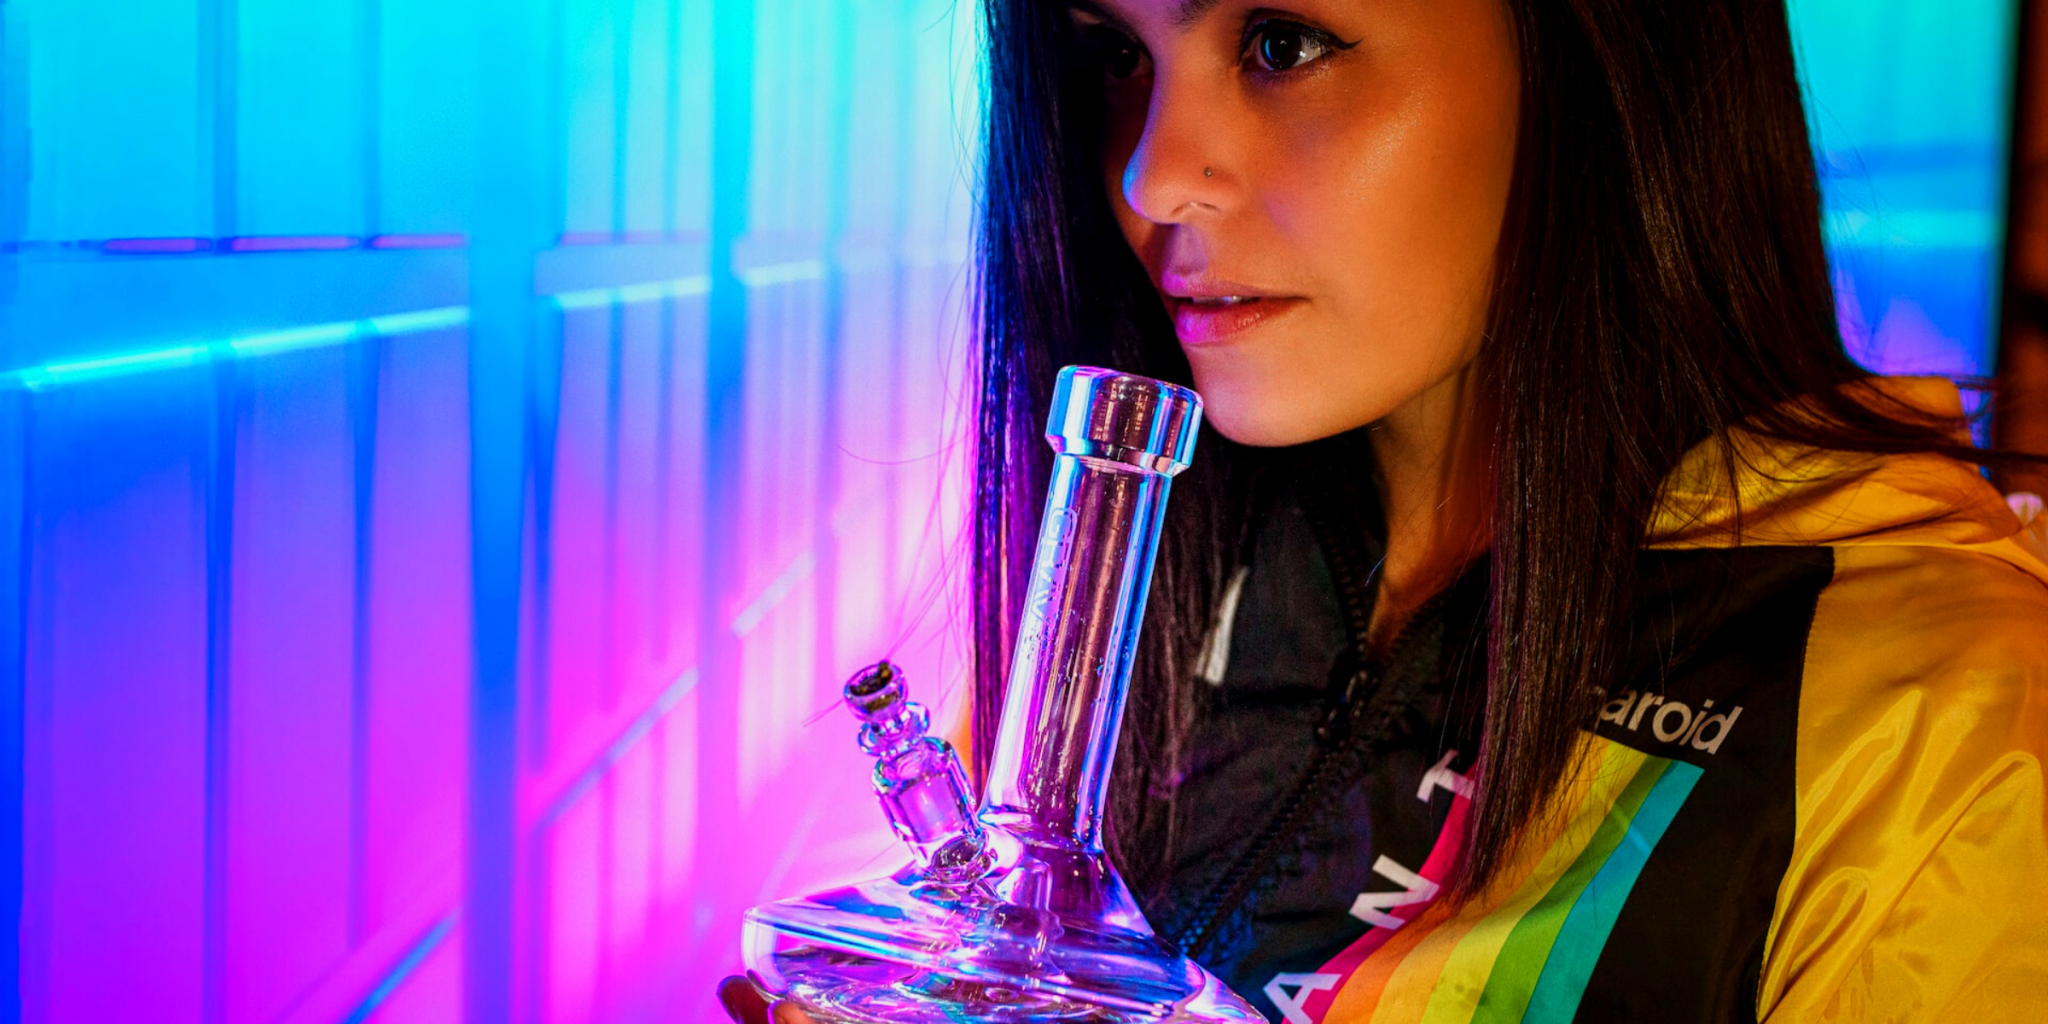 Young woman smoking marijuana out of glass bong